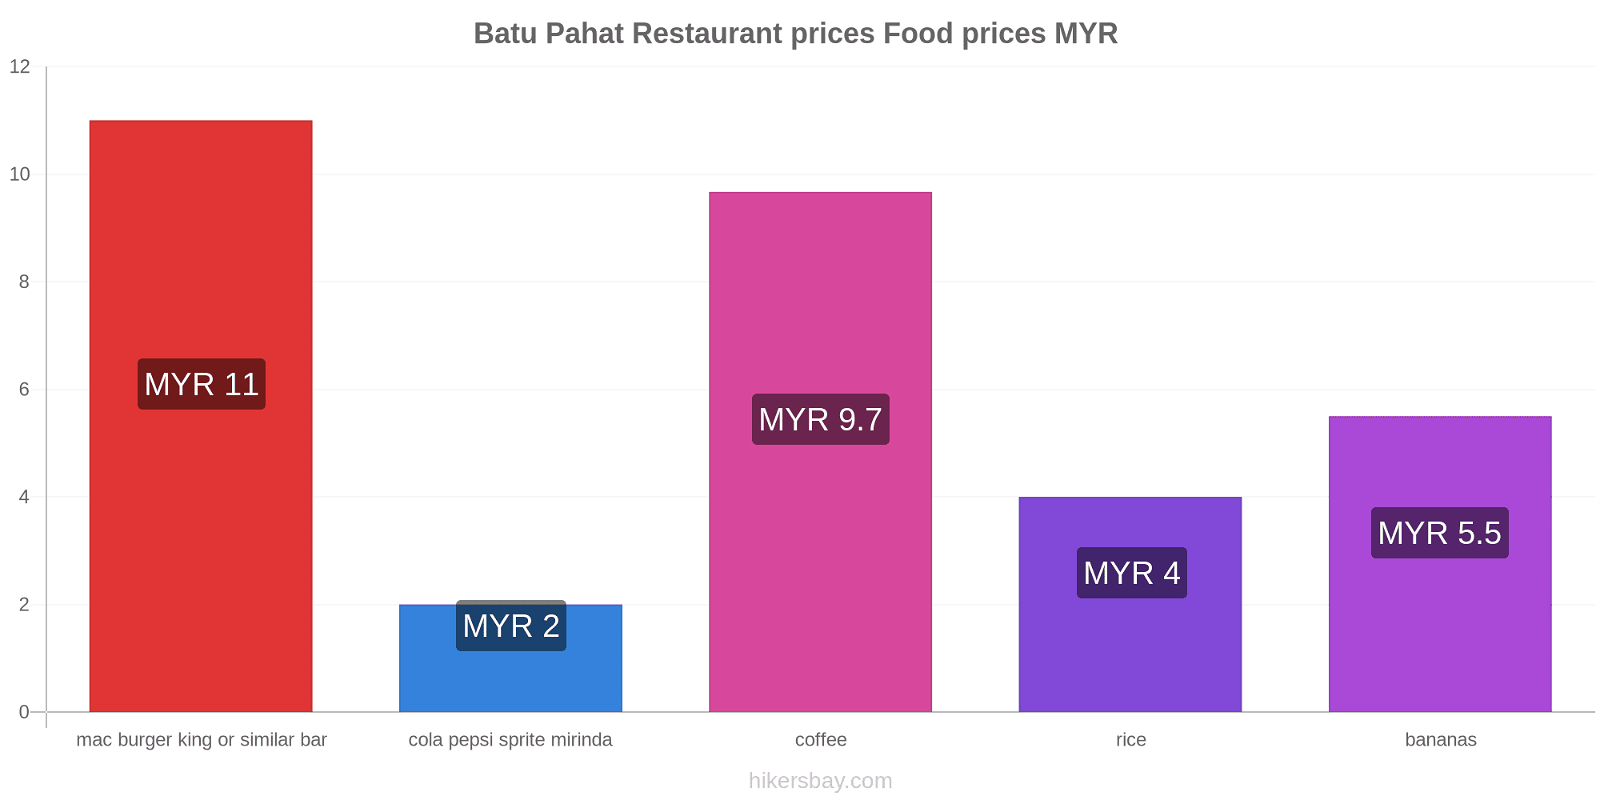 Batu Pahat price changes hikersbay.com